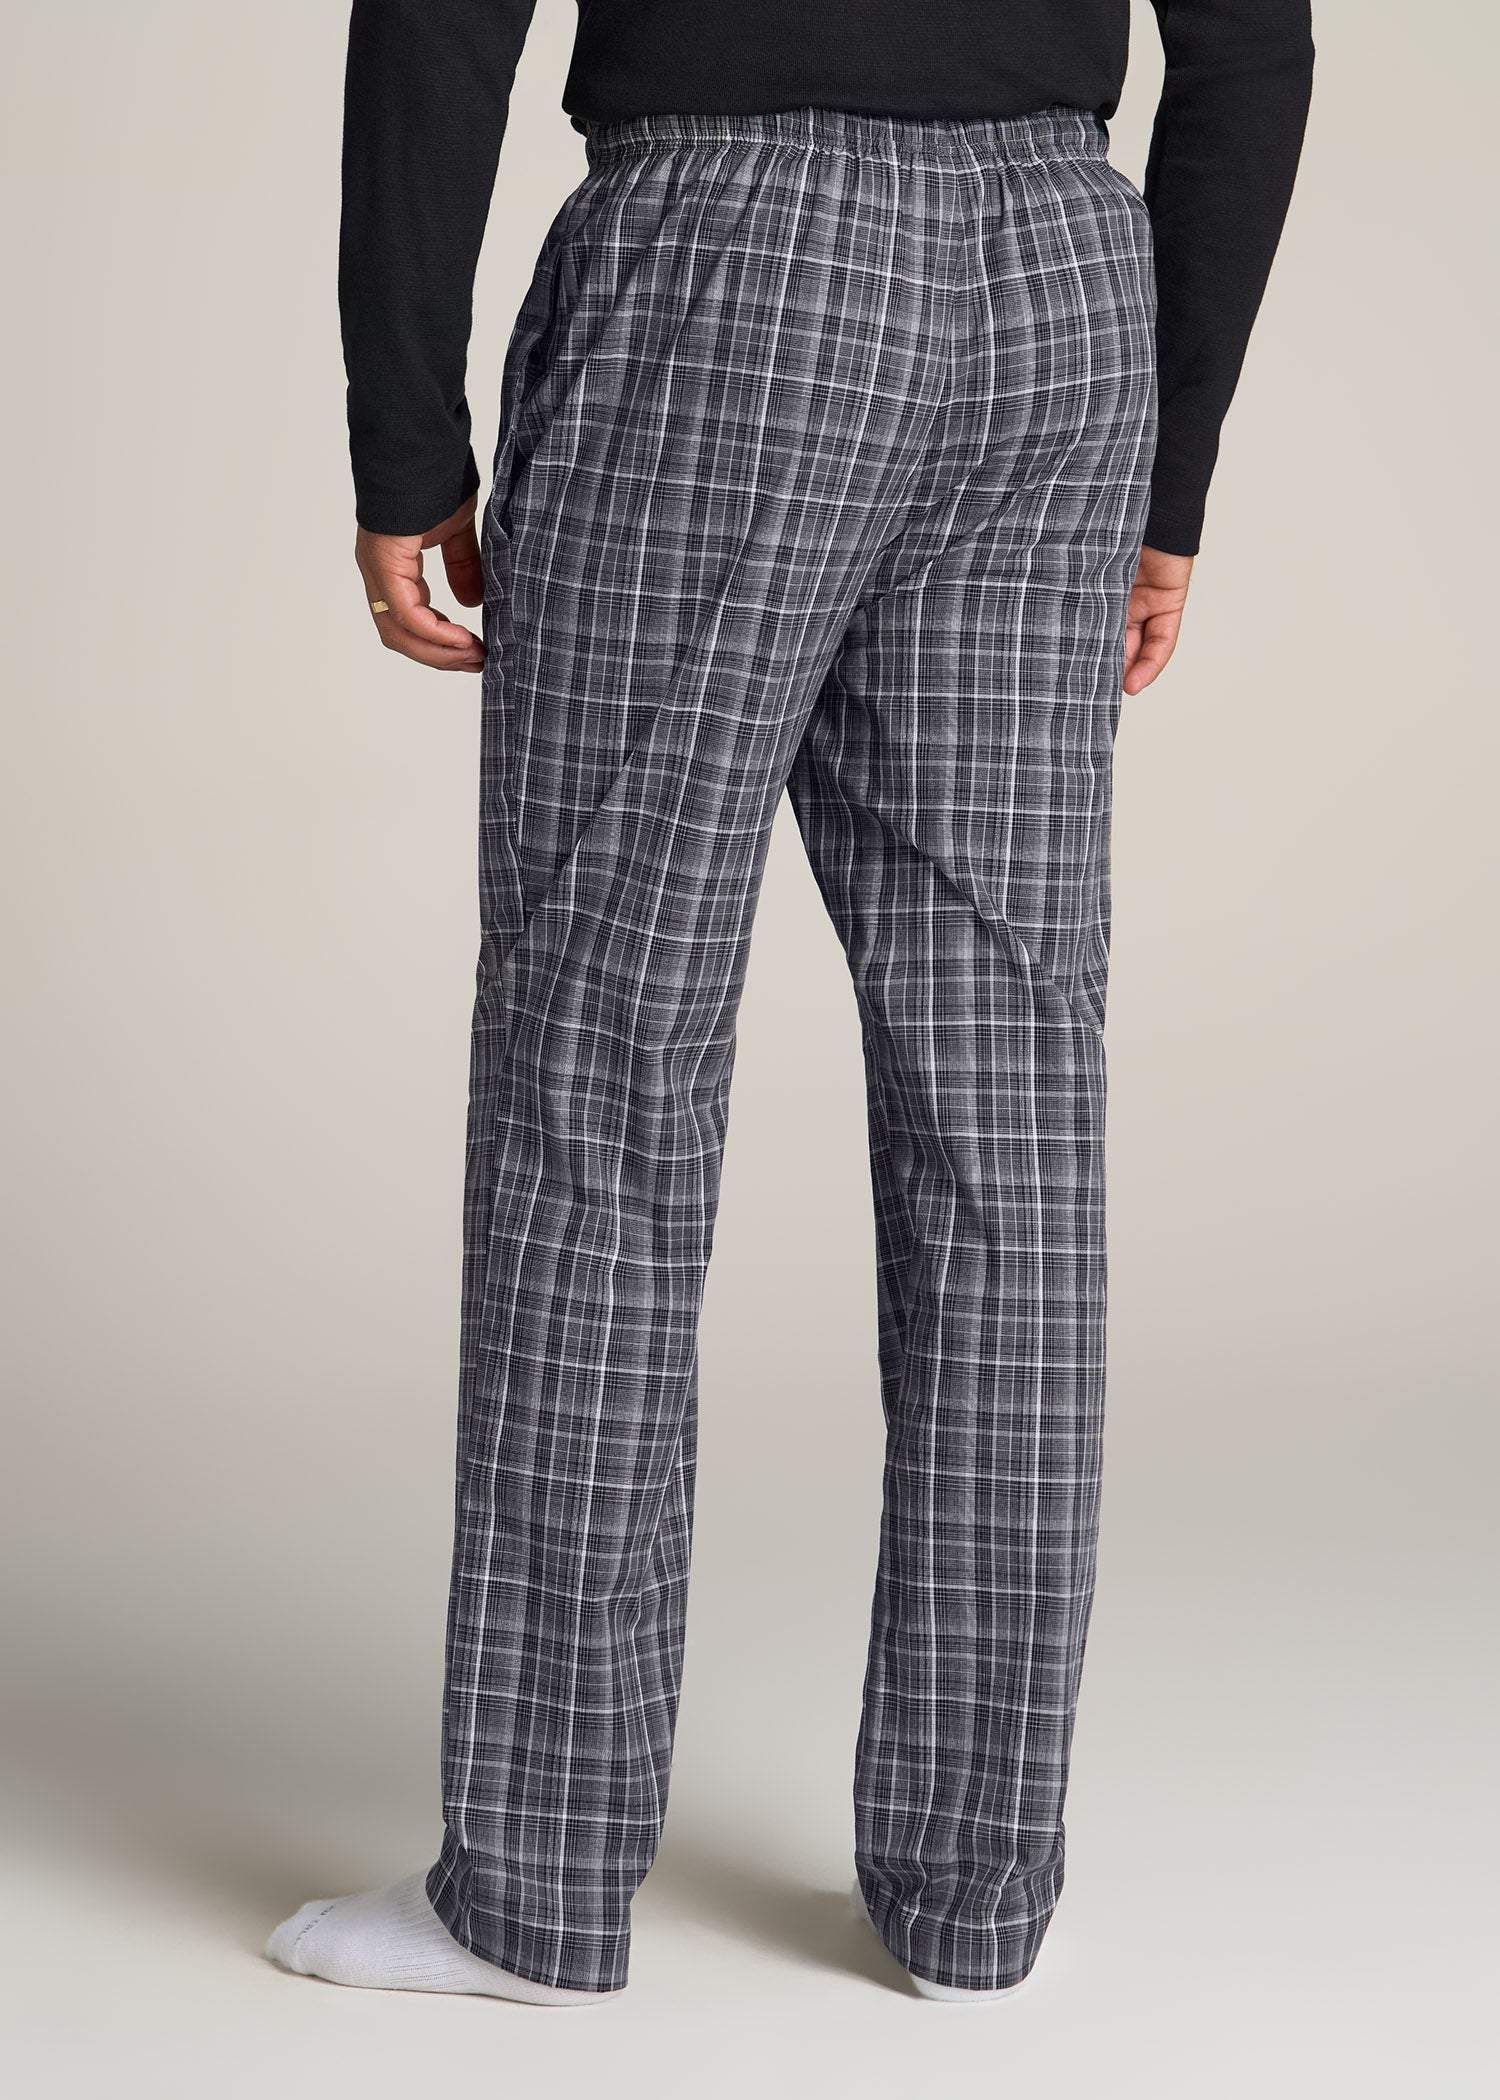 Idtswch 32/34/36/38 Long Inseam Men's Big & Tall 100% Cotton Plaid Pajama  Pants Sleepwear Pajama Bottoms (Black/White 920, S(30-32W)/34